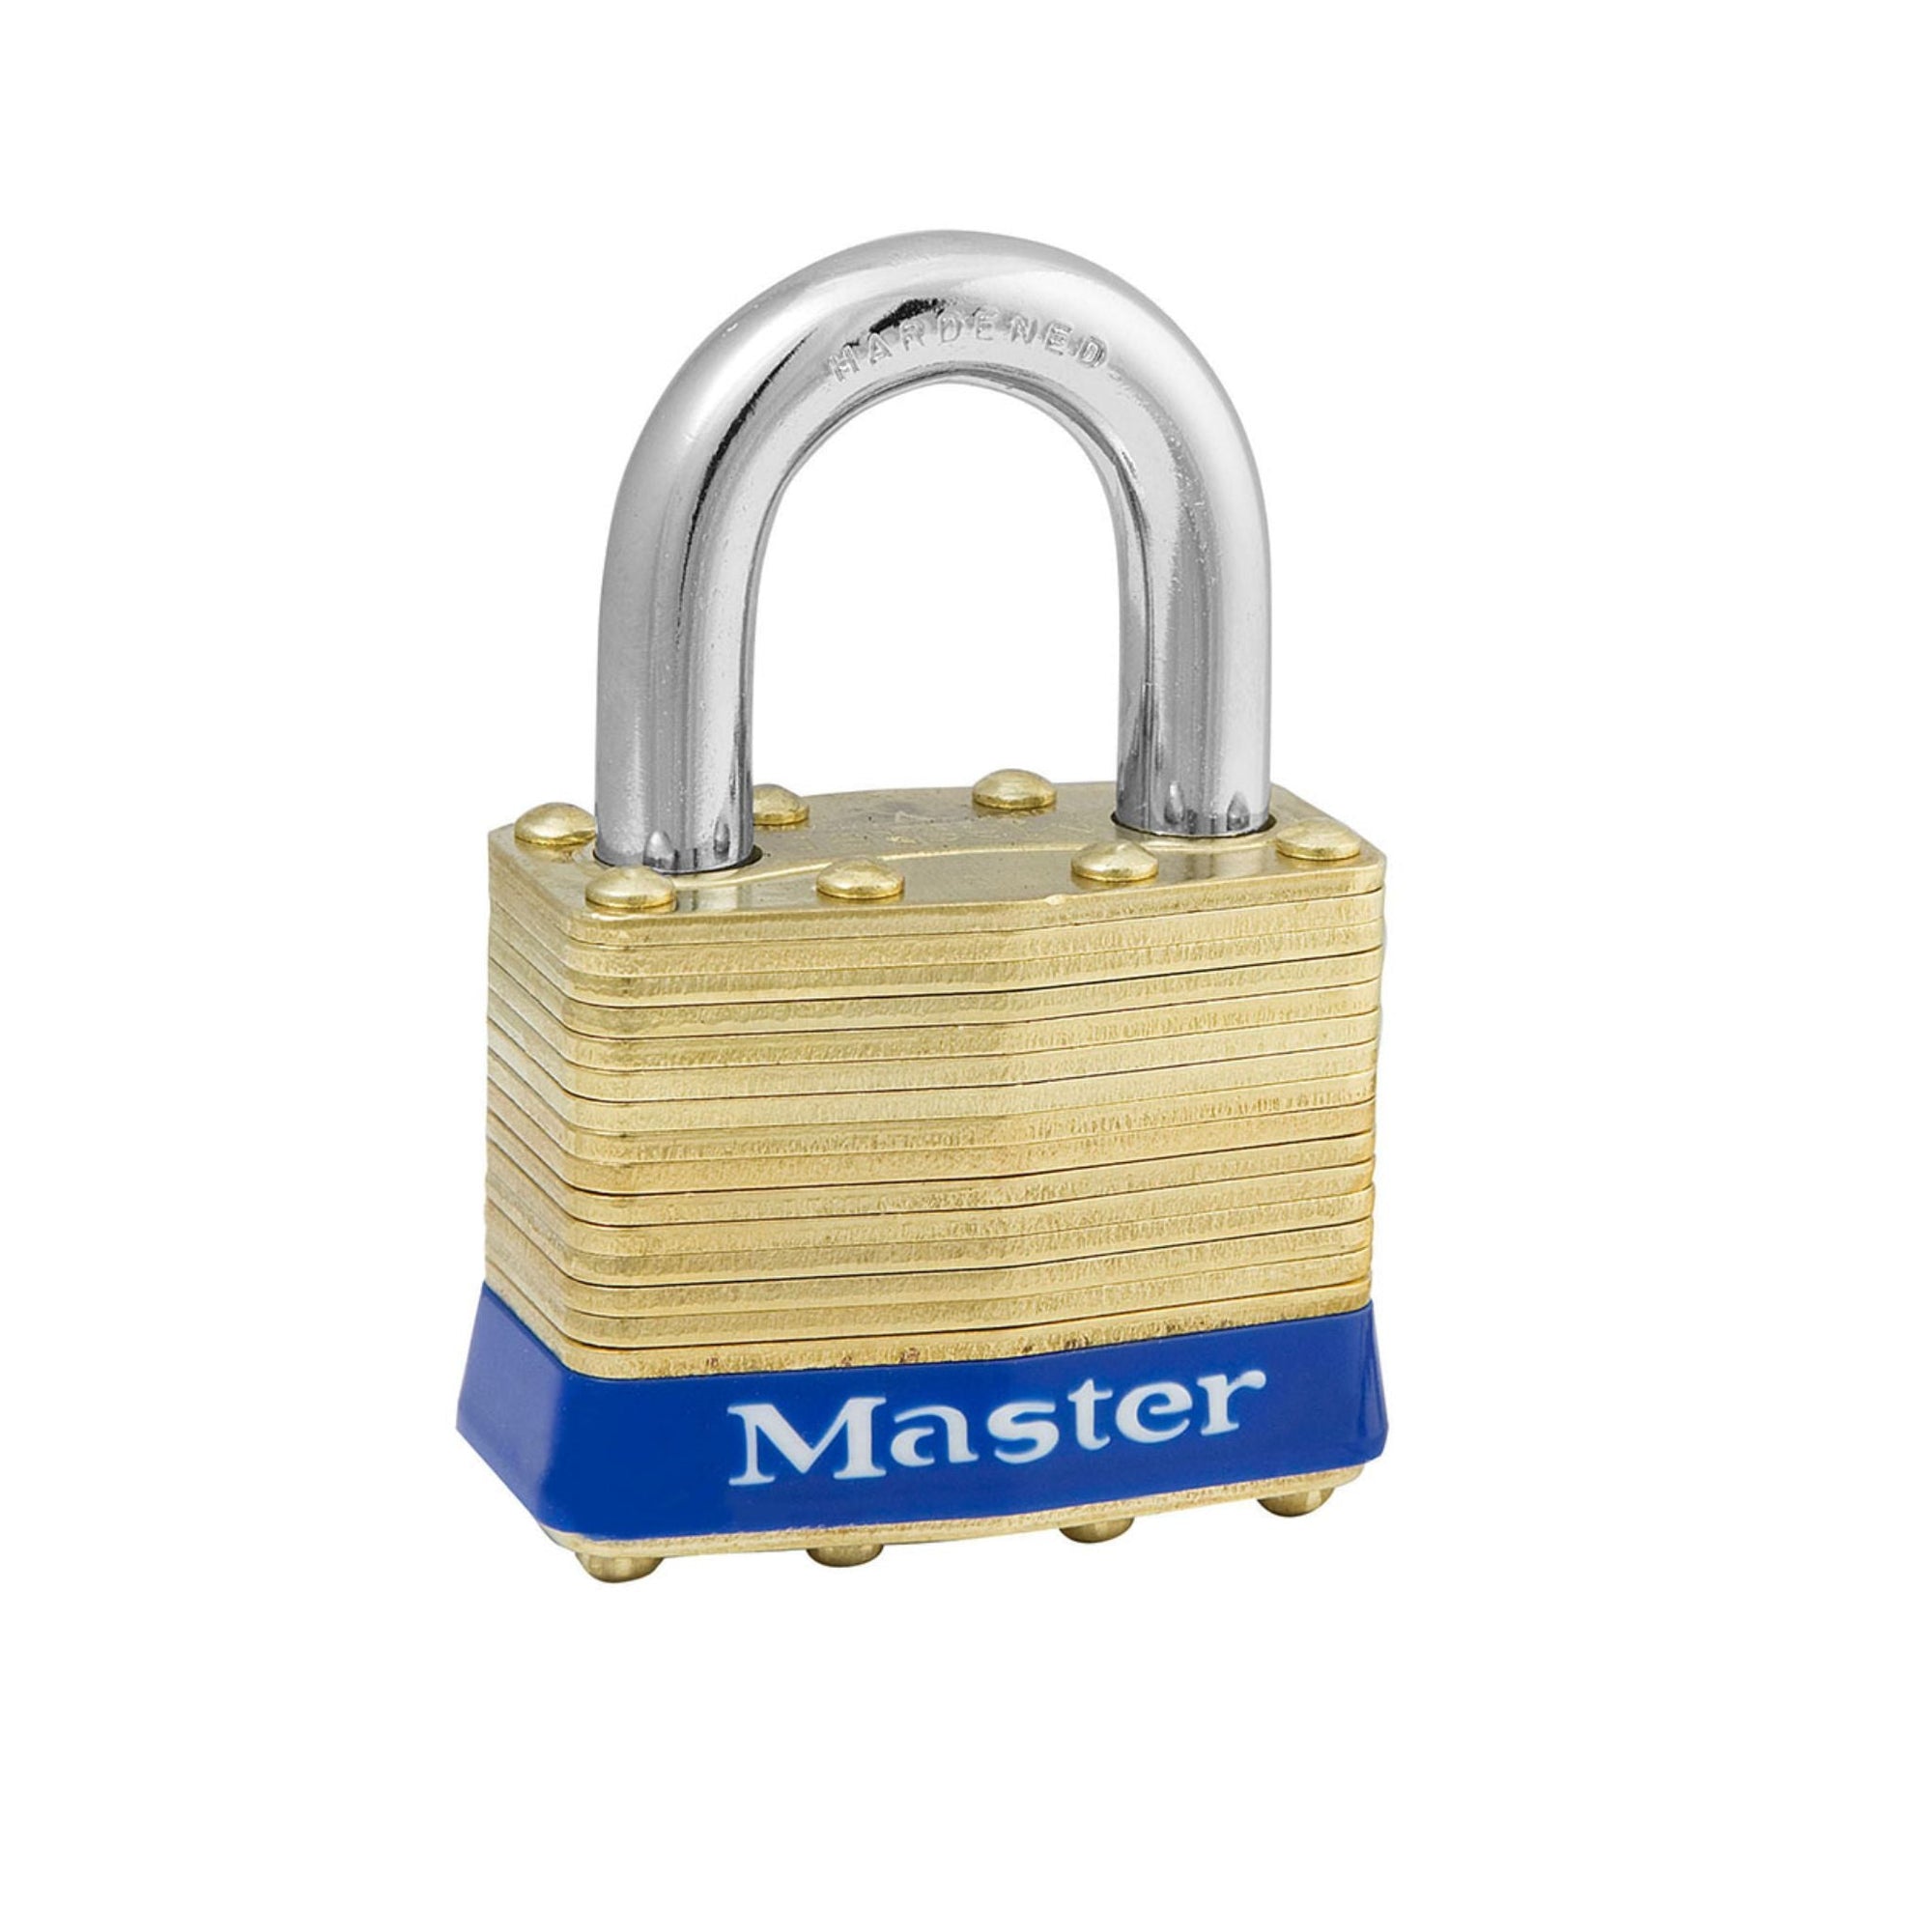 Master Lock 2KA 0319 Lock Laminated brass No. 2 Series Padlock Keyed to Match Existing Key Number KA0319 - The Lock Source